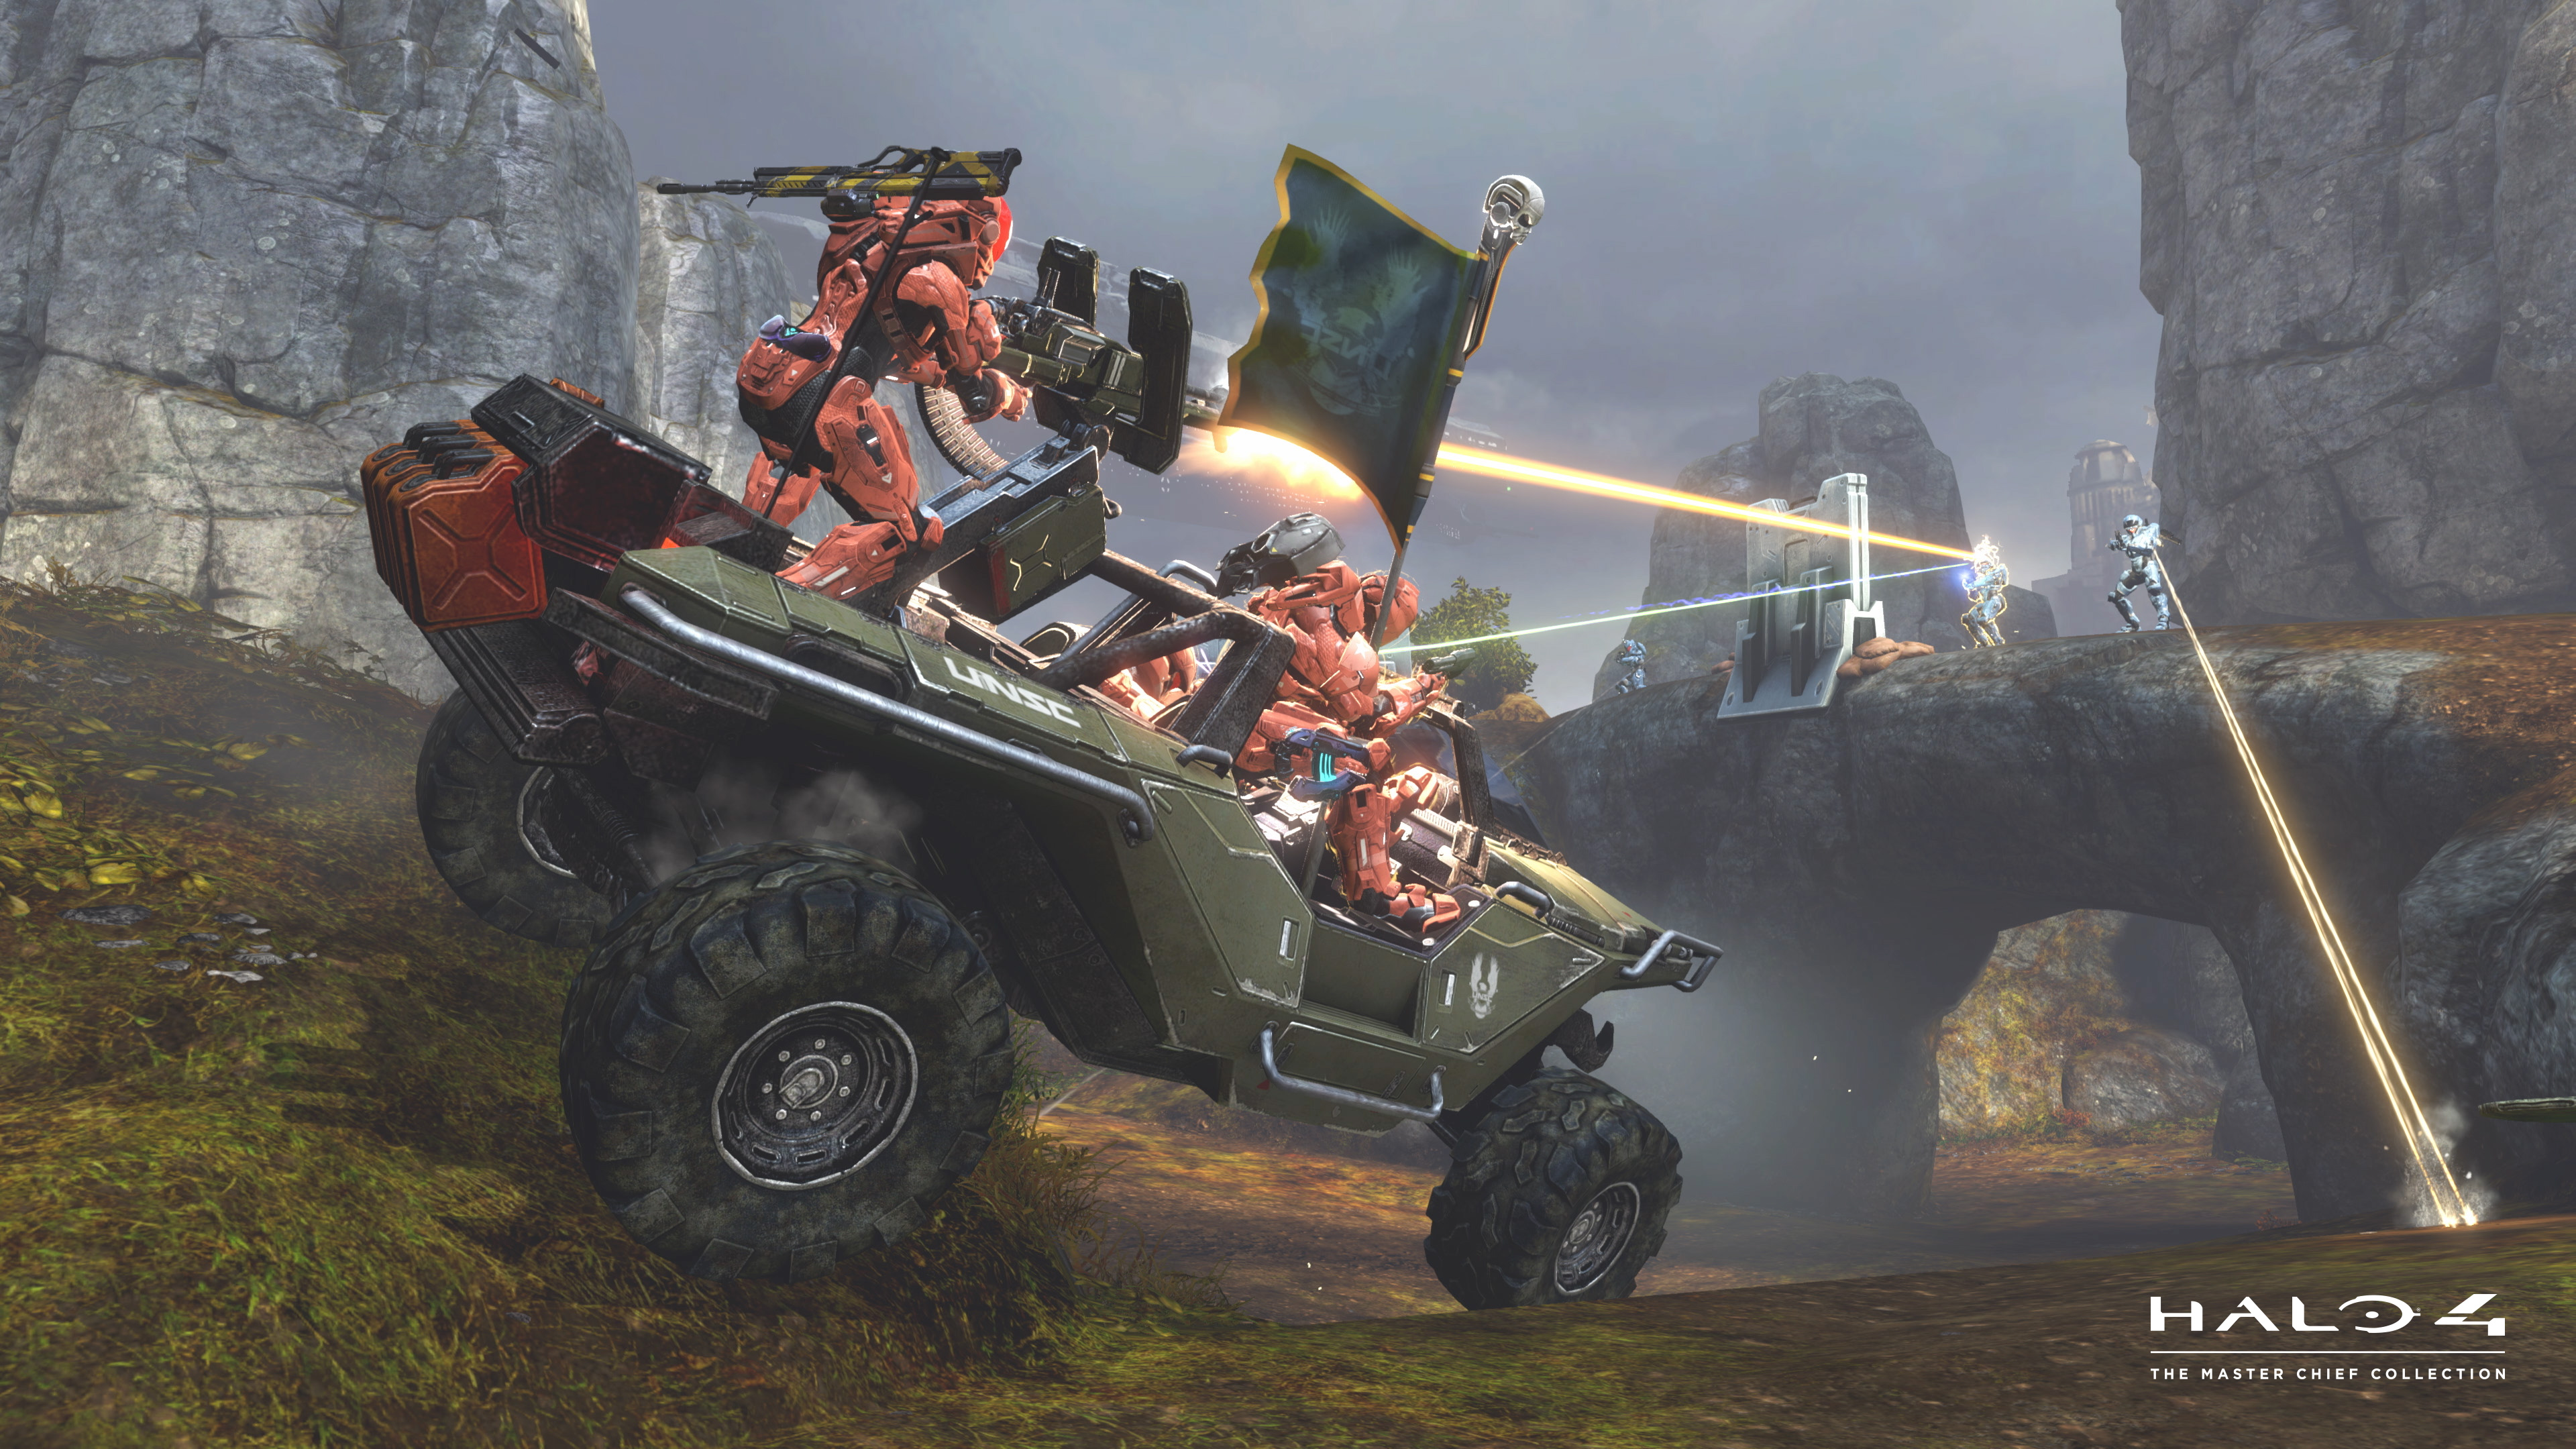 jbachdesign: Halo 4 Live-Action Trailer